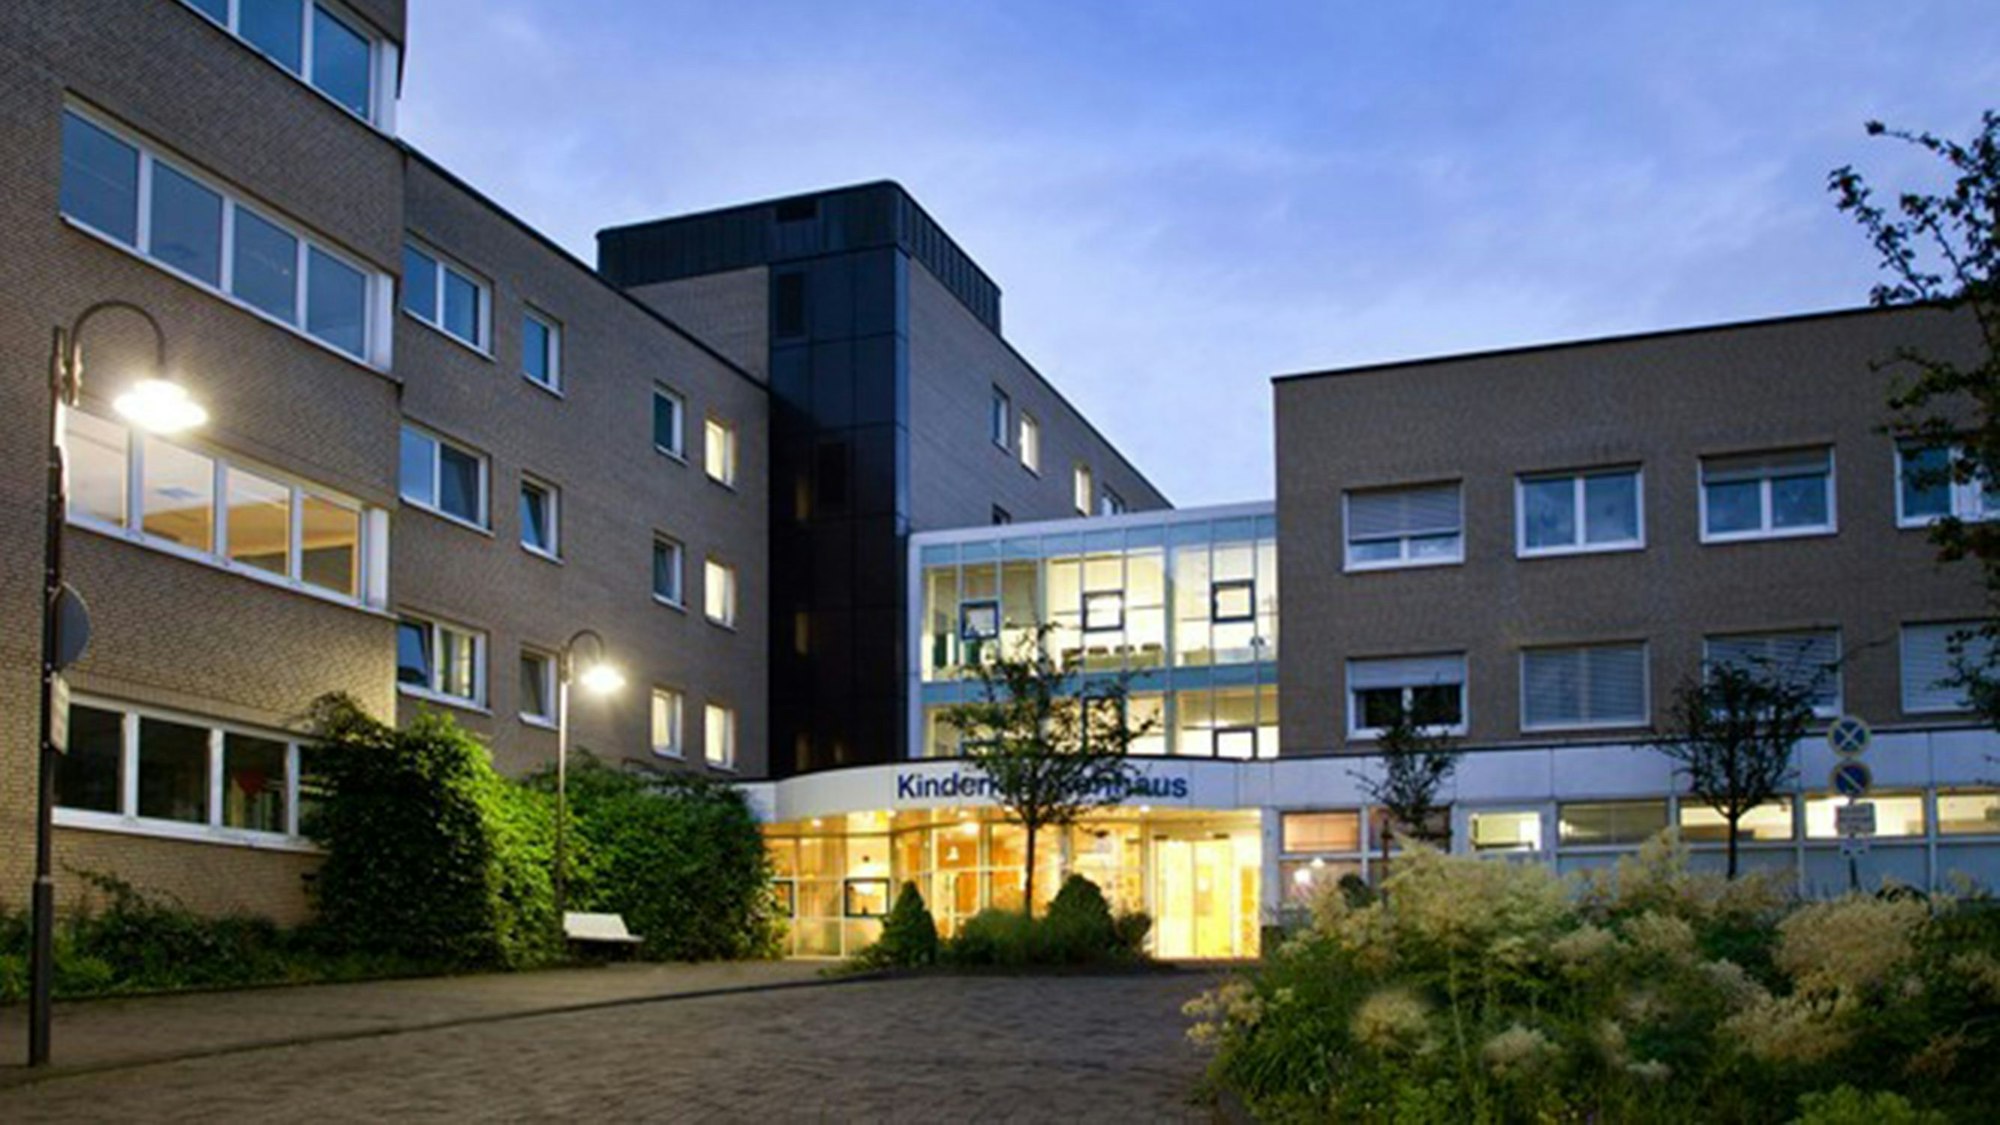 Eingang des Kinderkrankenhauses Amsterdamer Straße in Köln